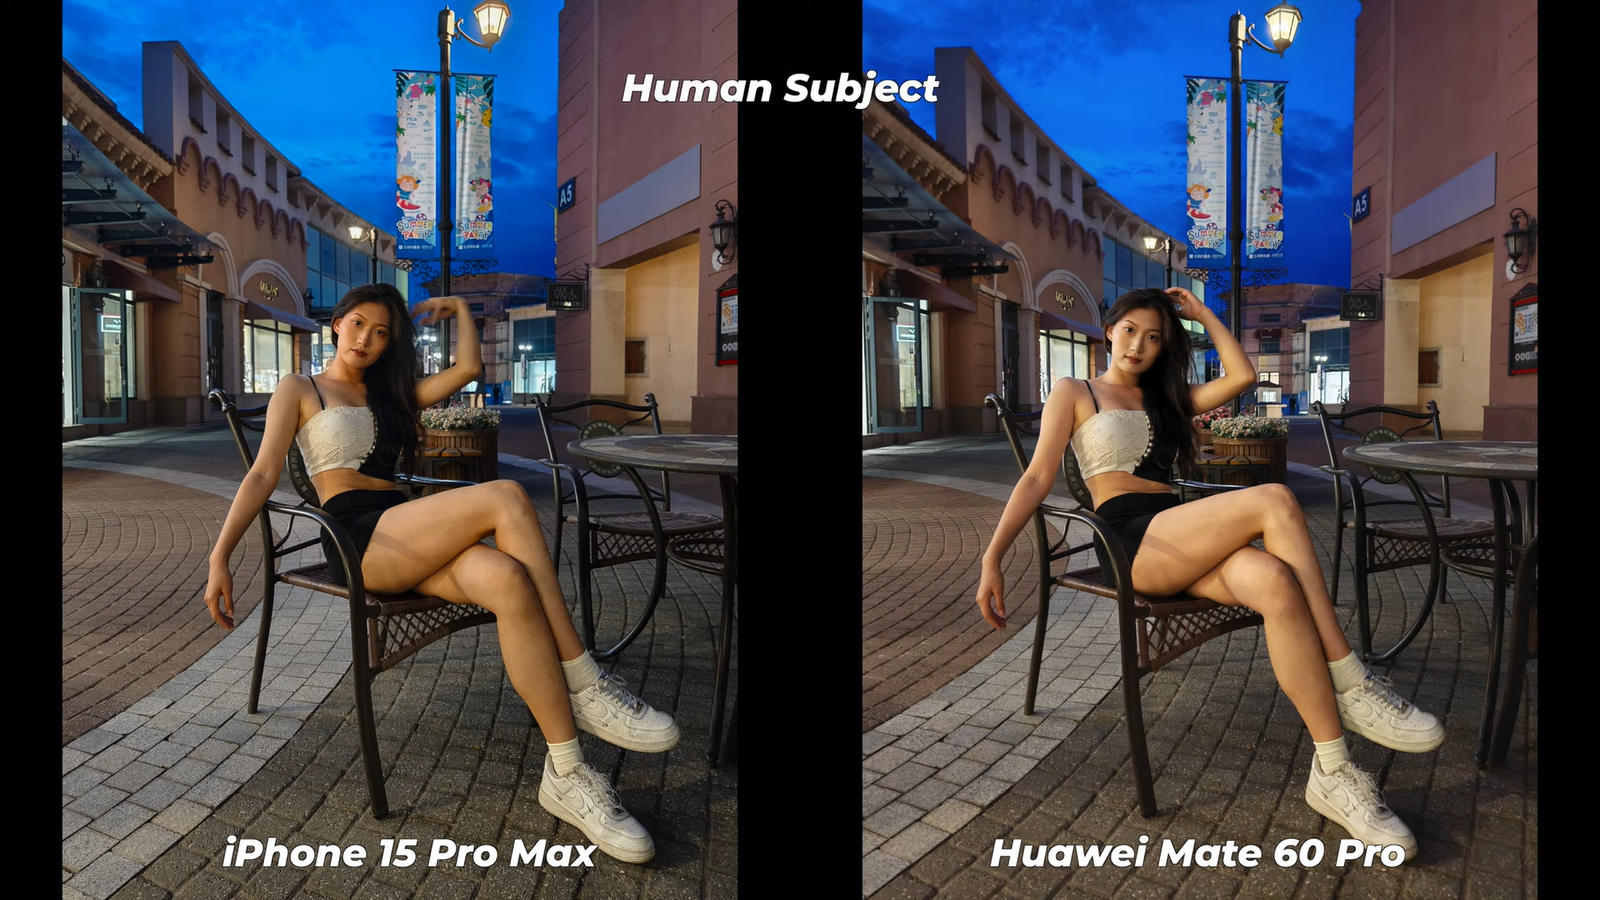 iPhone 15 Pro Max сравнили с лучшими смартфонами Huawei и Xiaomi по качеству камер